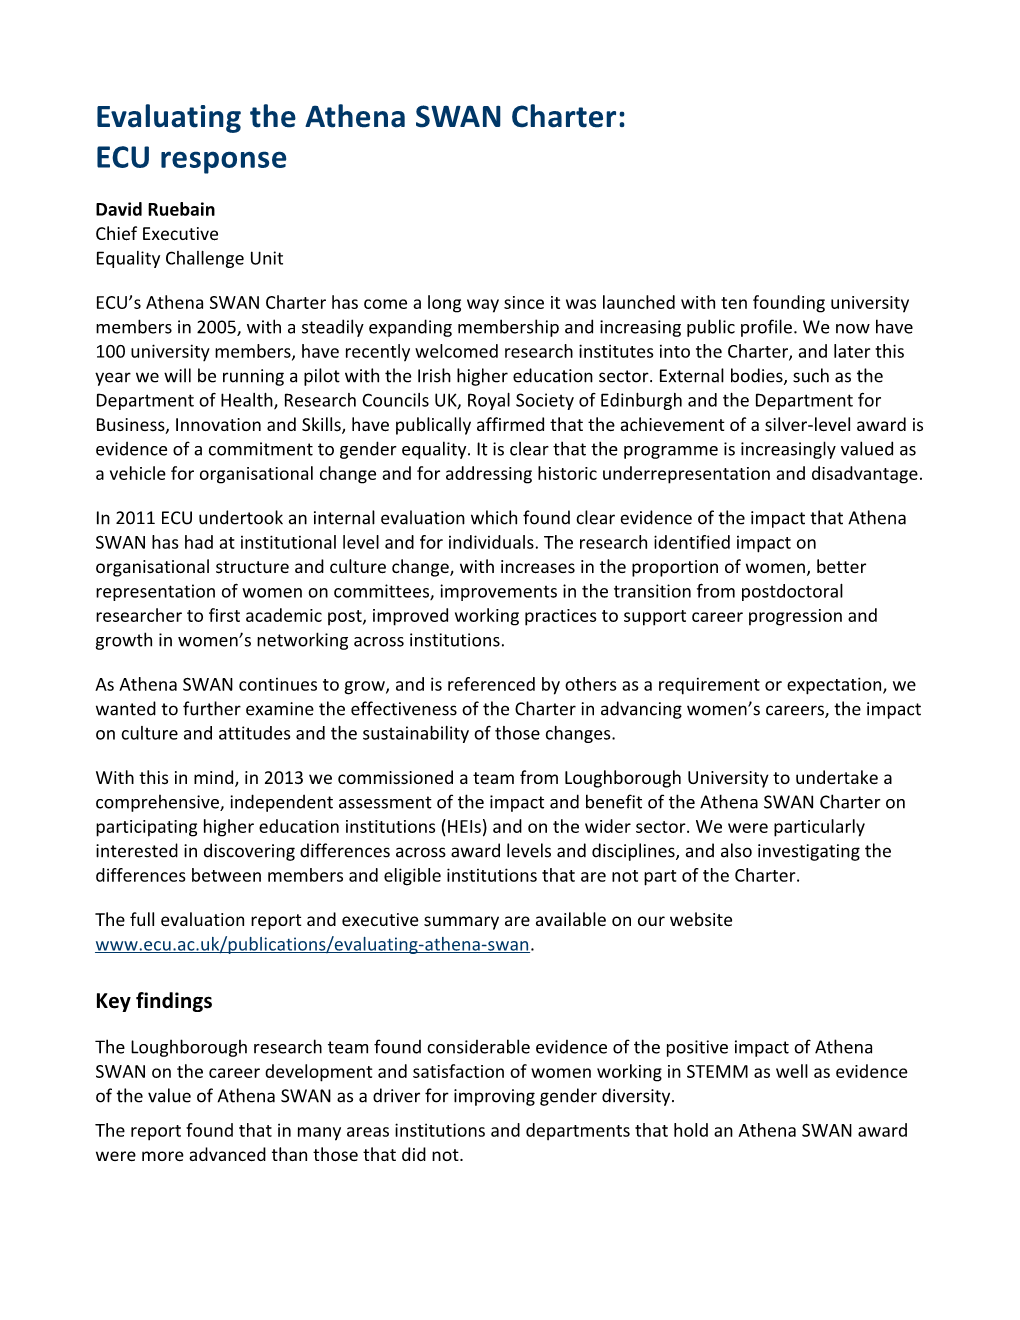 Evaluating the Athena SWAN Charter: ECU Response